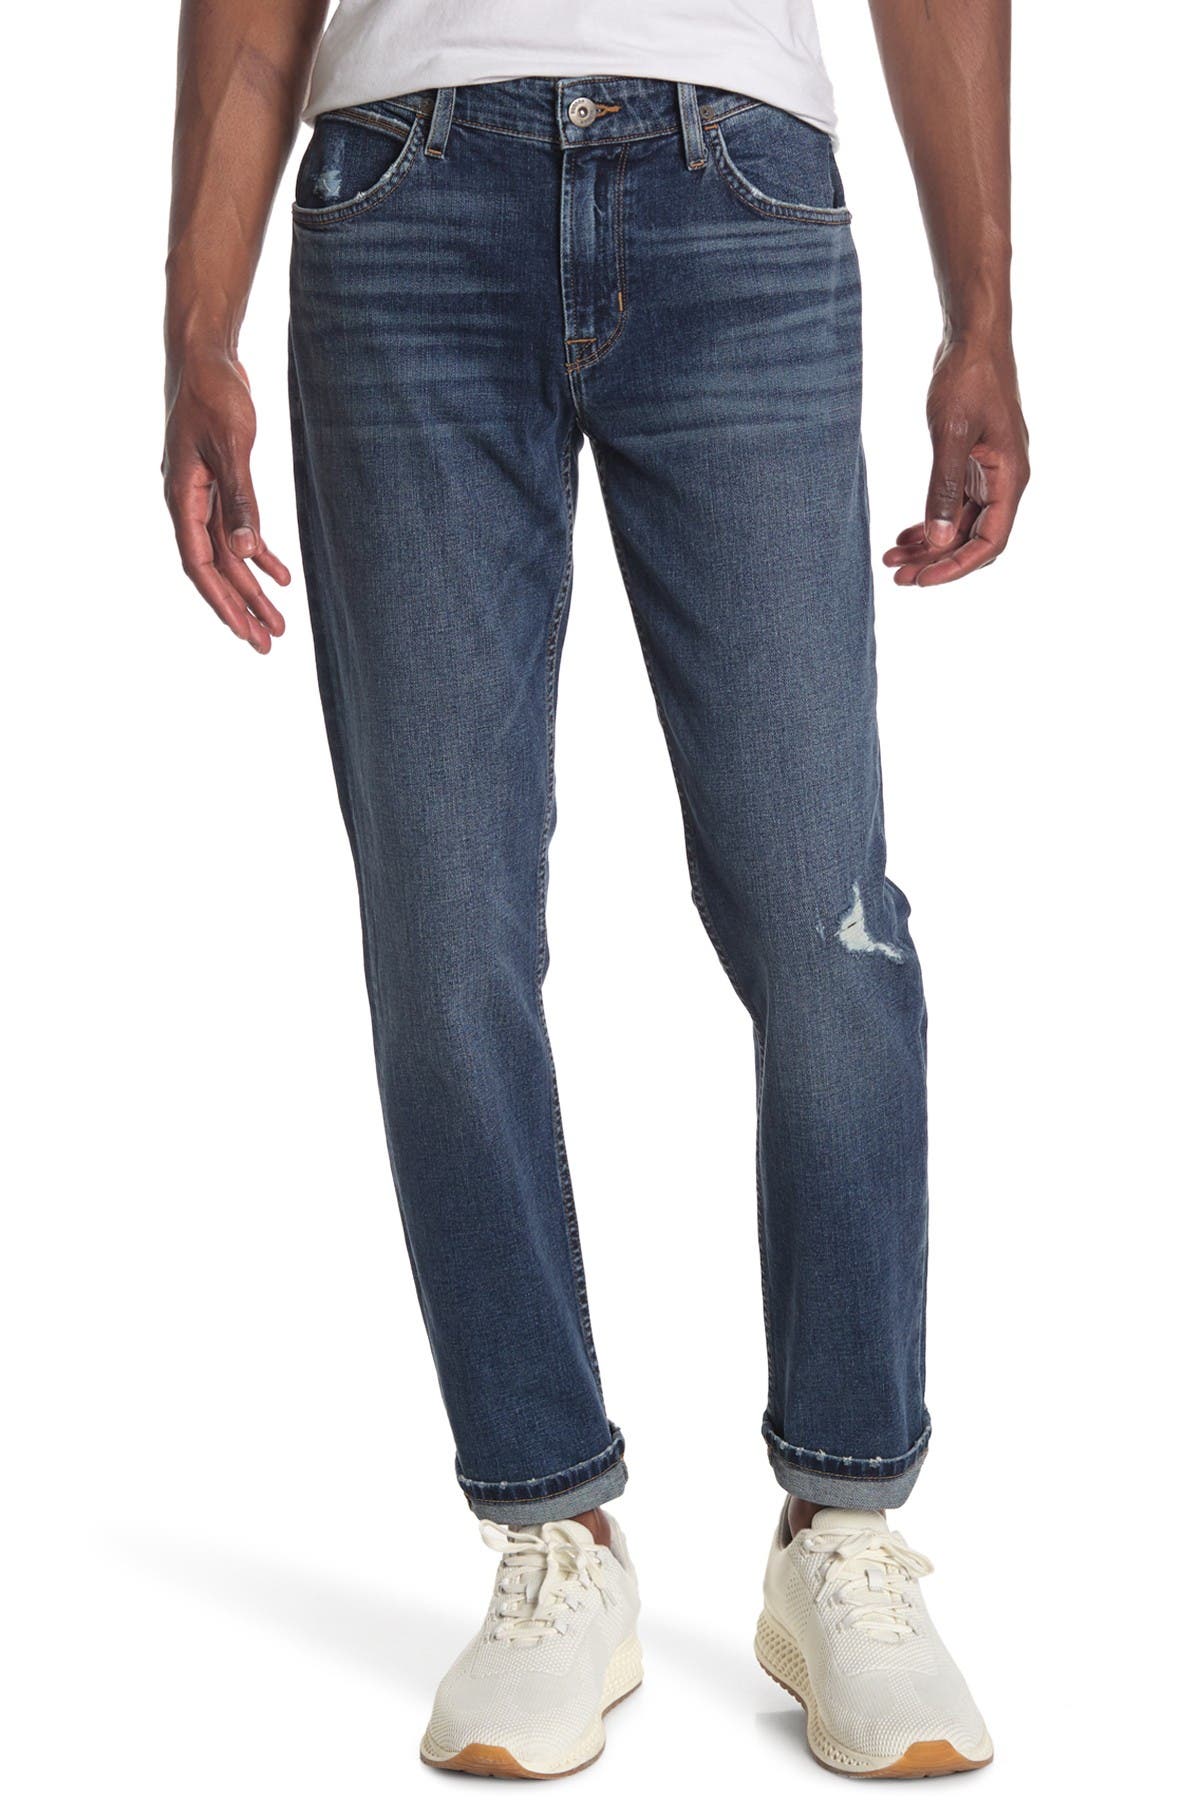 hudson jeans for sale